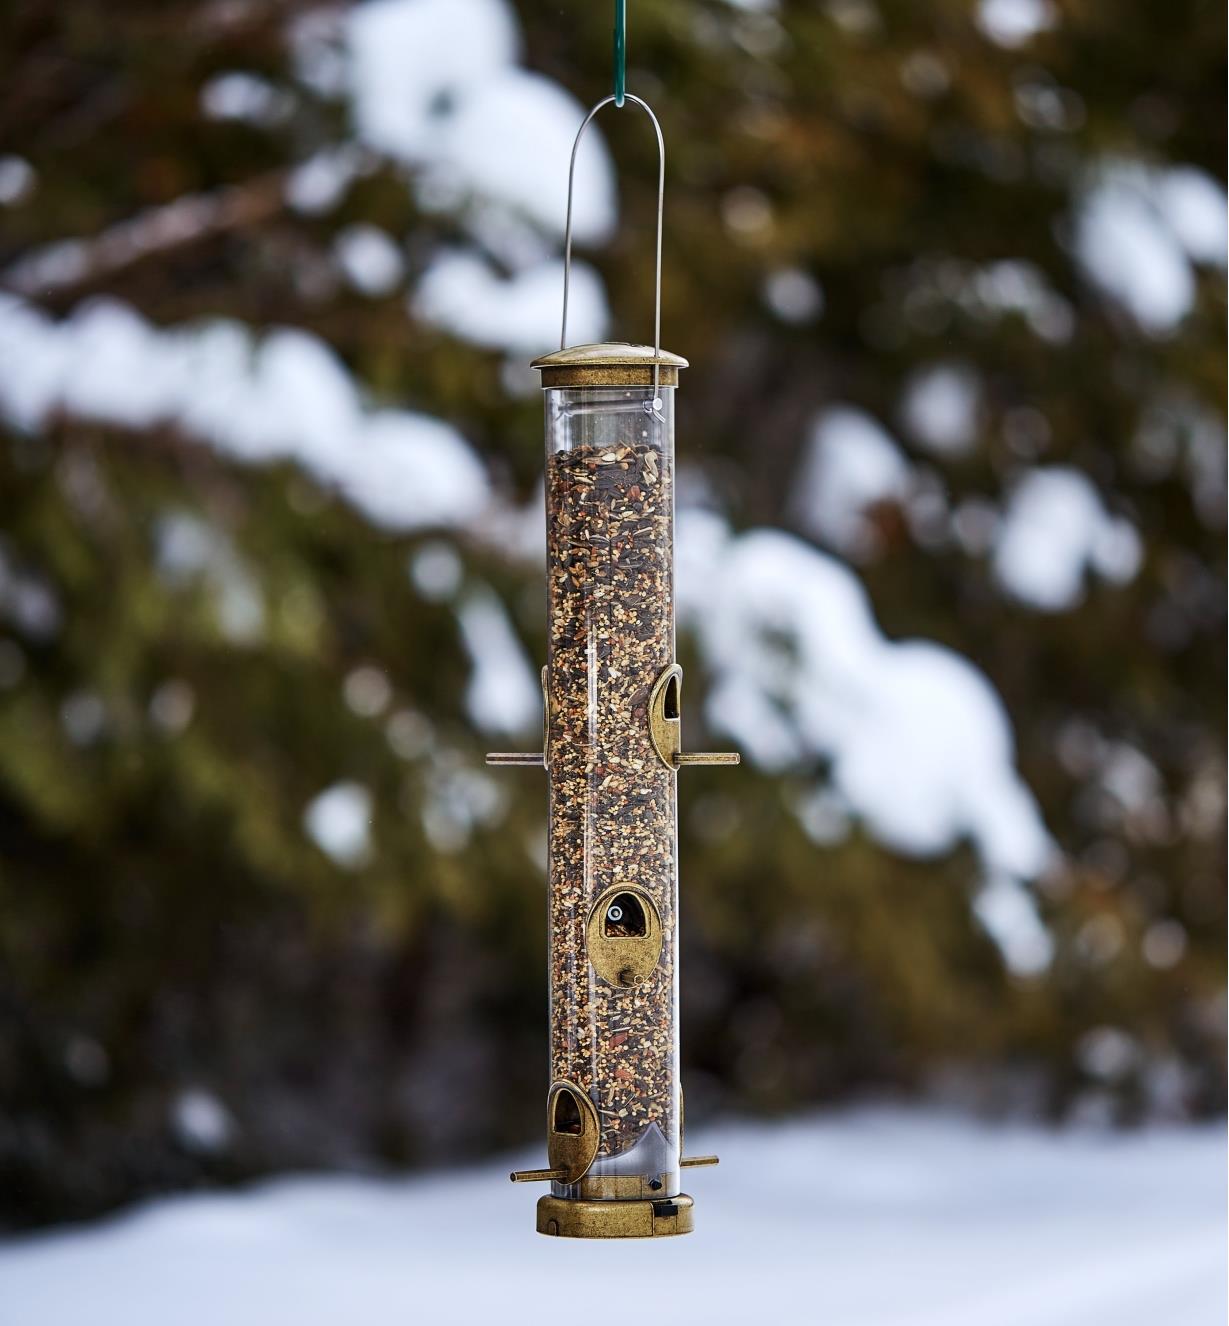 A songbird feeder full of seeds hangs outdoors